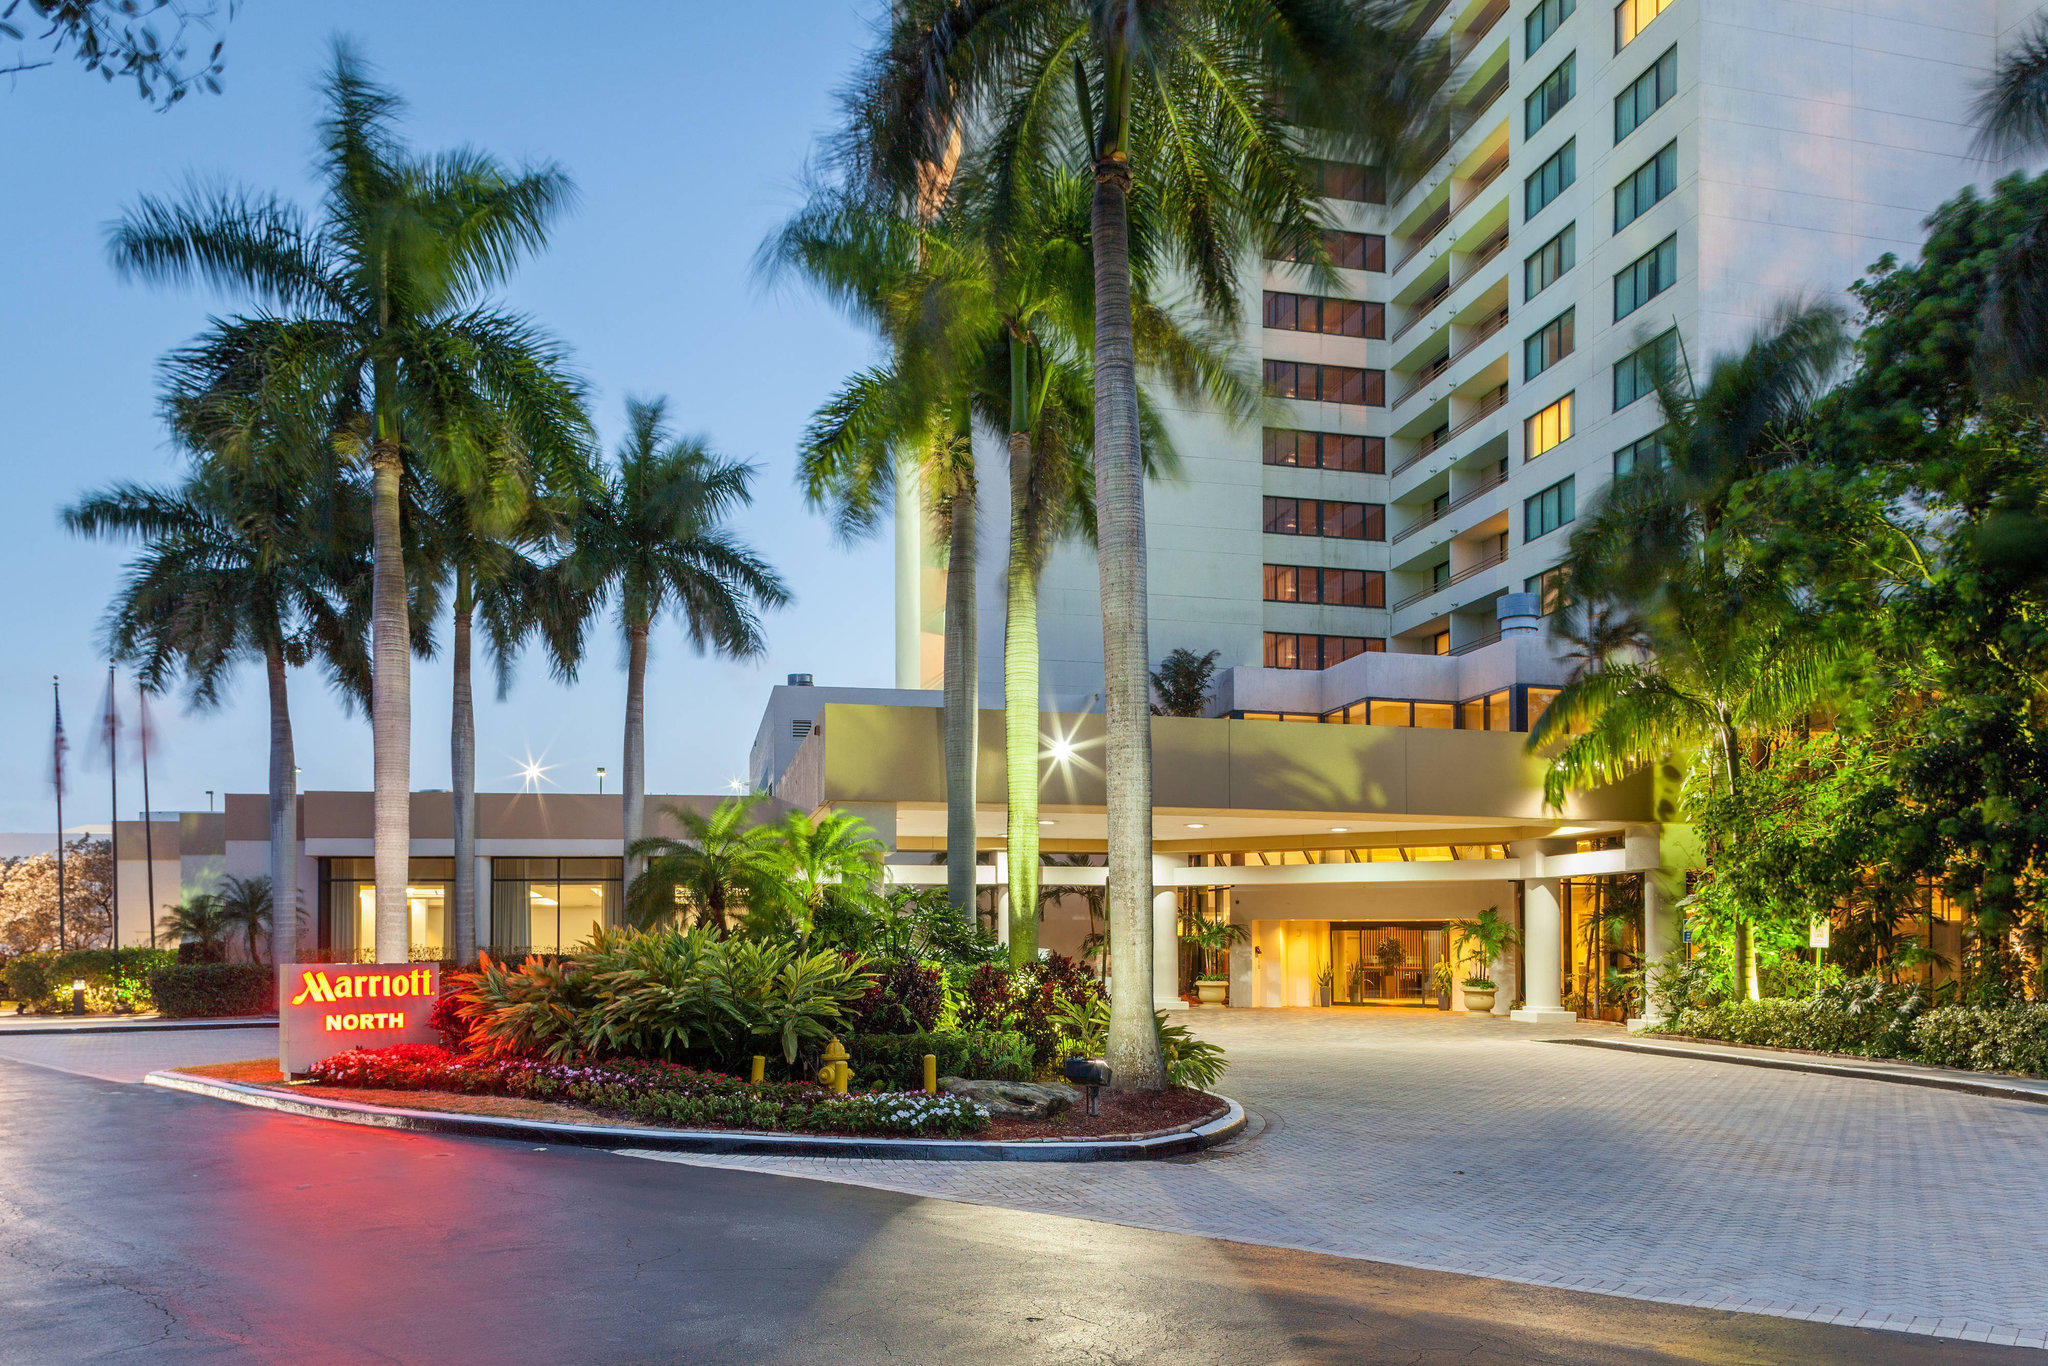 Fort Lauderdale Marriott North Photo